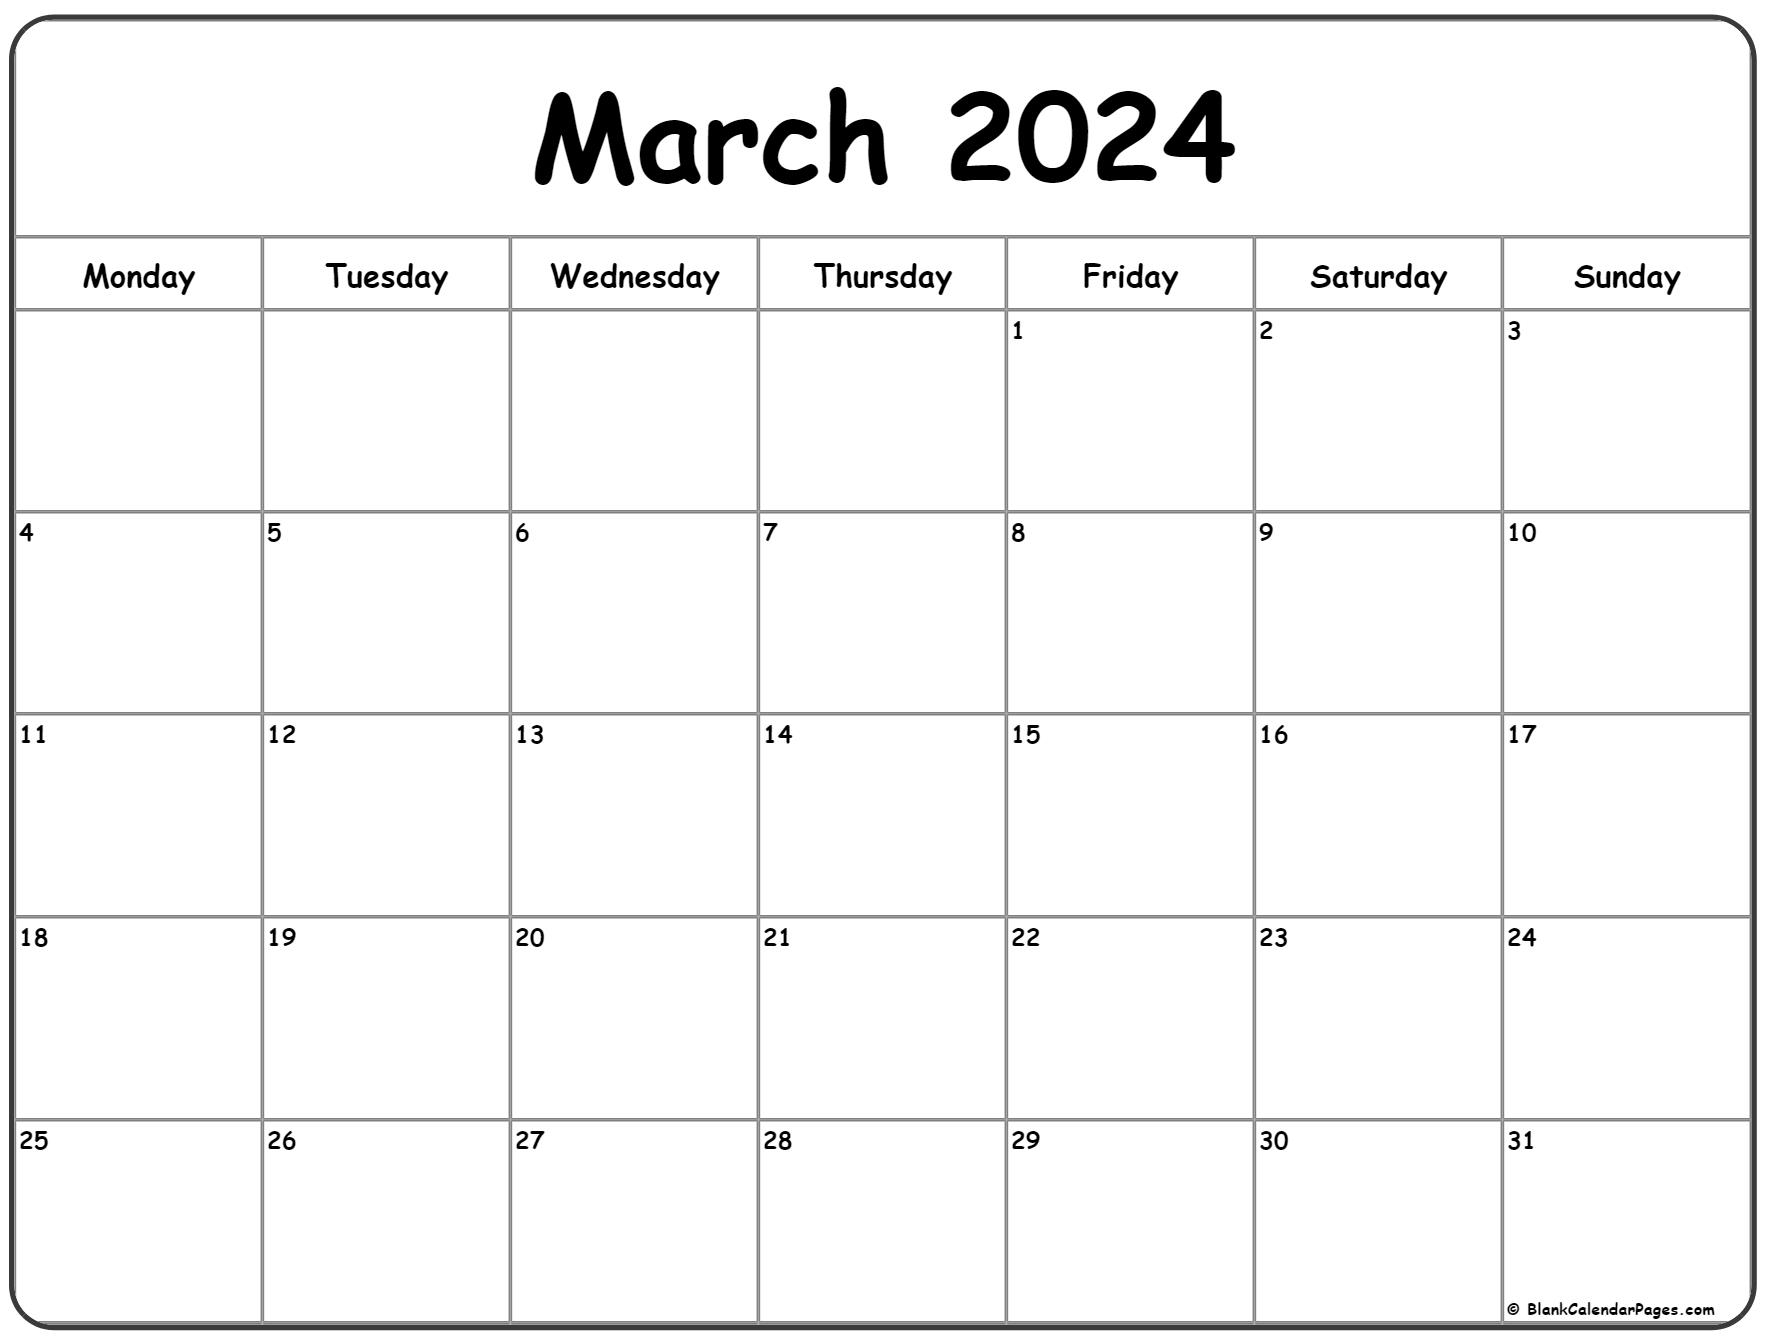 March 2024 Monday Calendar | Monday To Sunday for 2024 Calendar March Printable